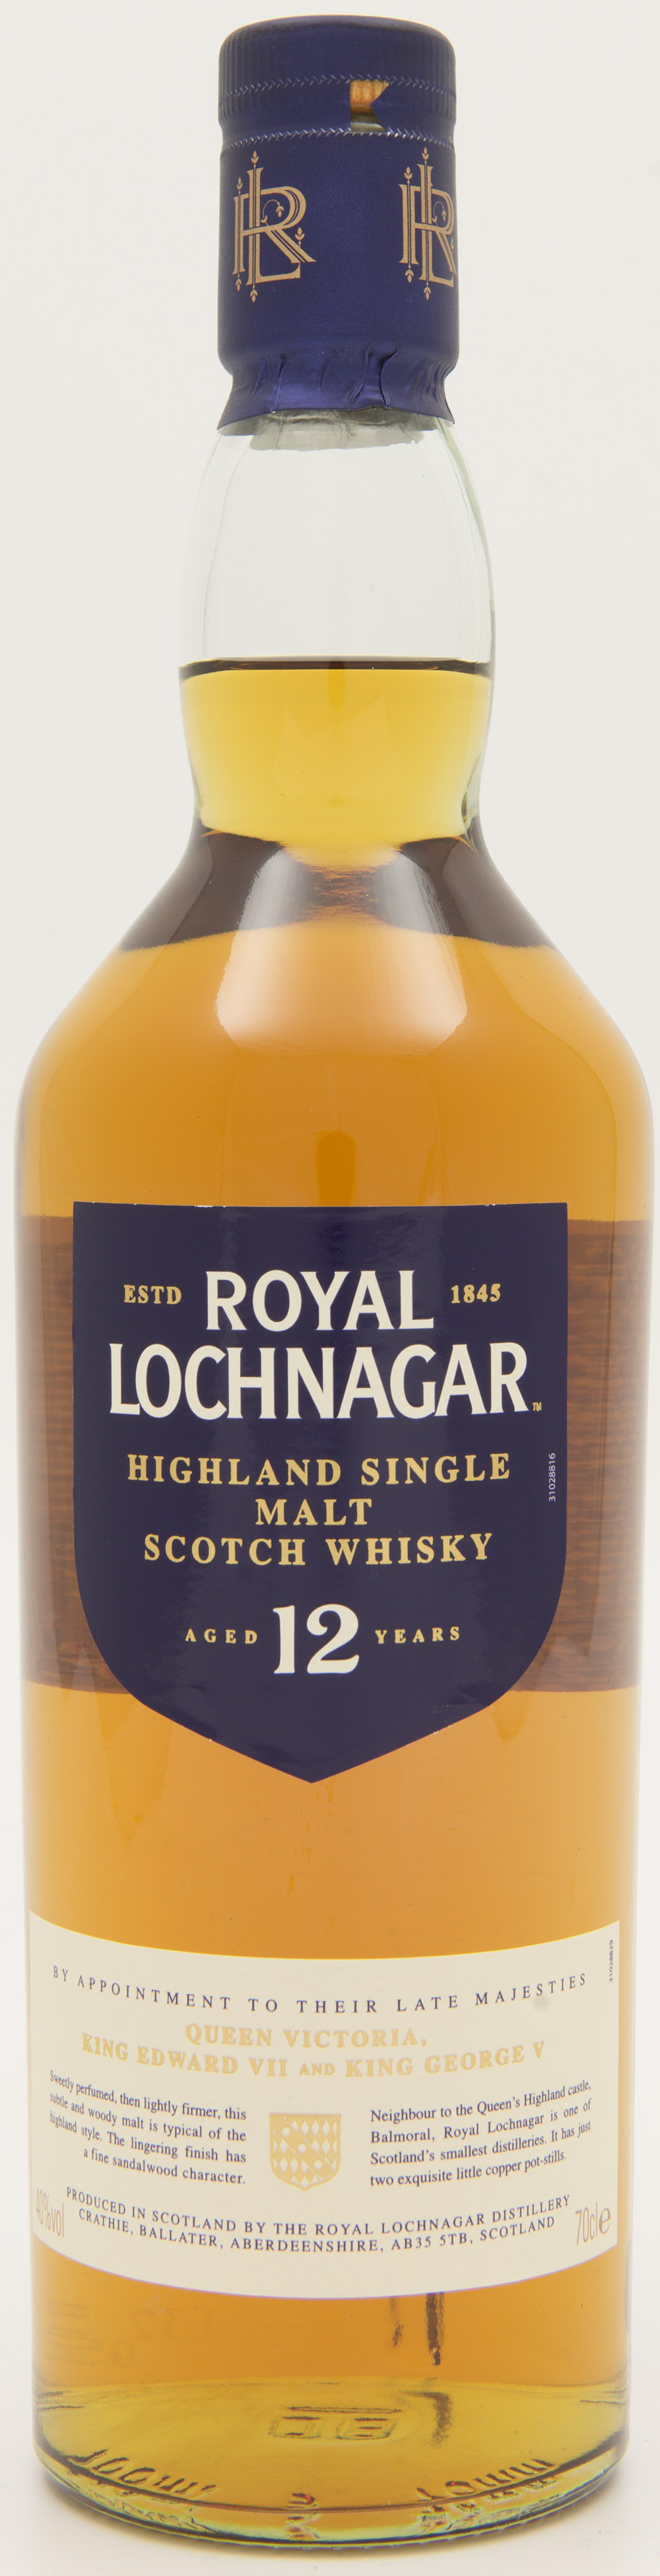 Billede: DSC_3741 Royal Lochnagar 12 - bottle front.jpg